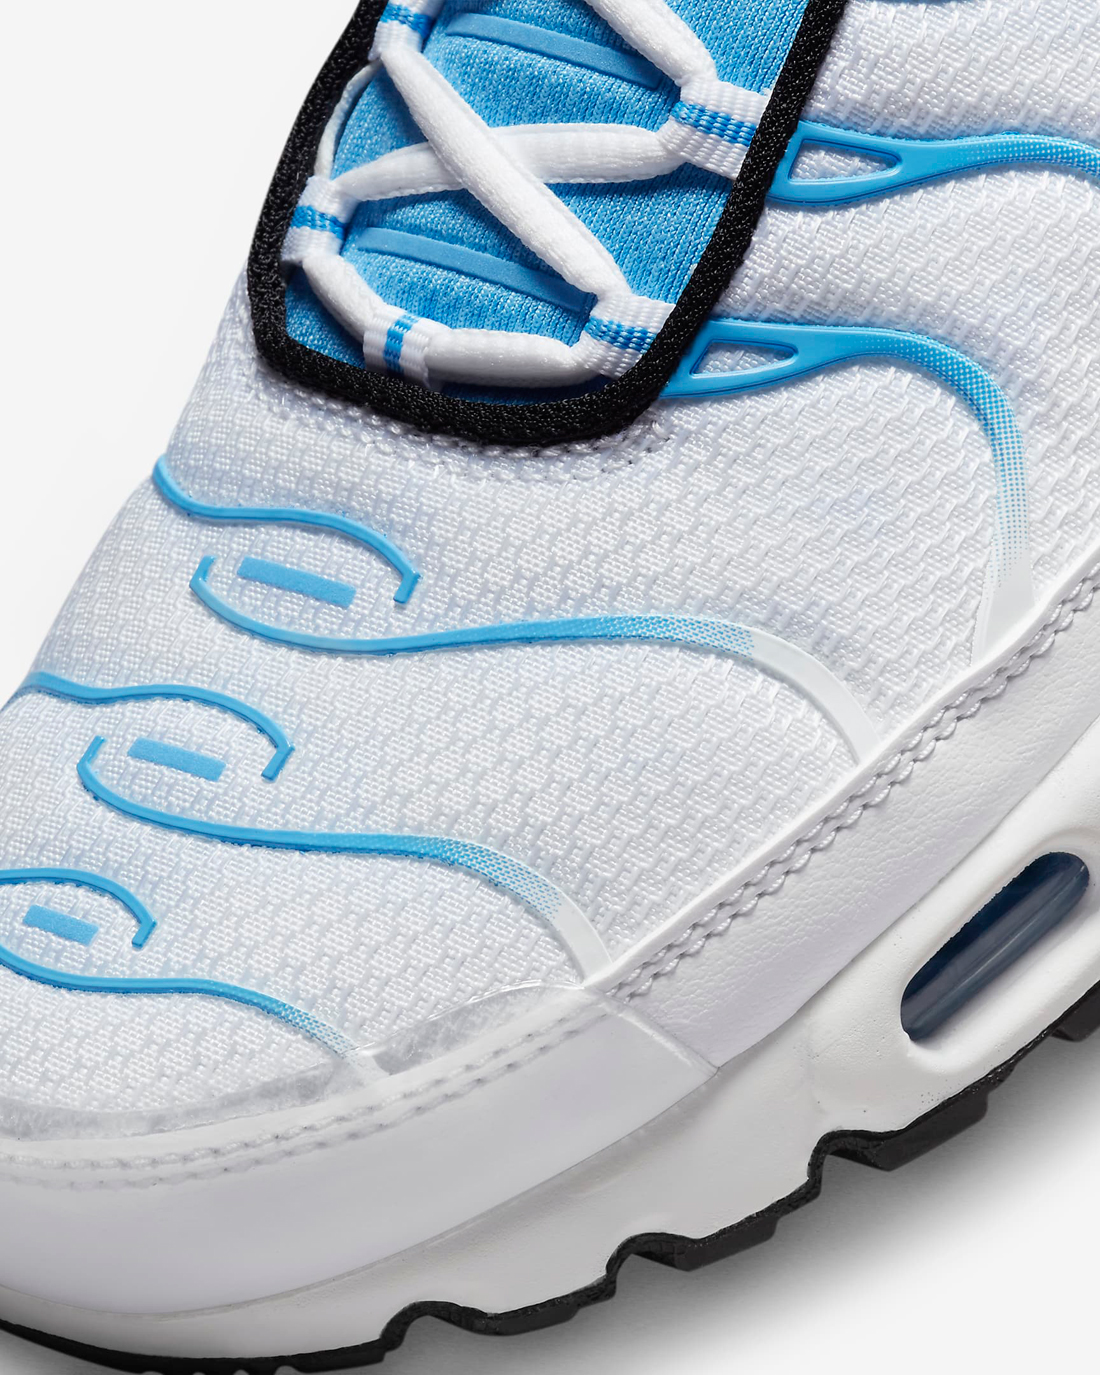 Nike-Air-Max-Plus-White-University-Blue-Release-Date-Info-7